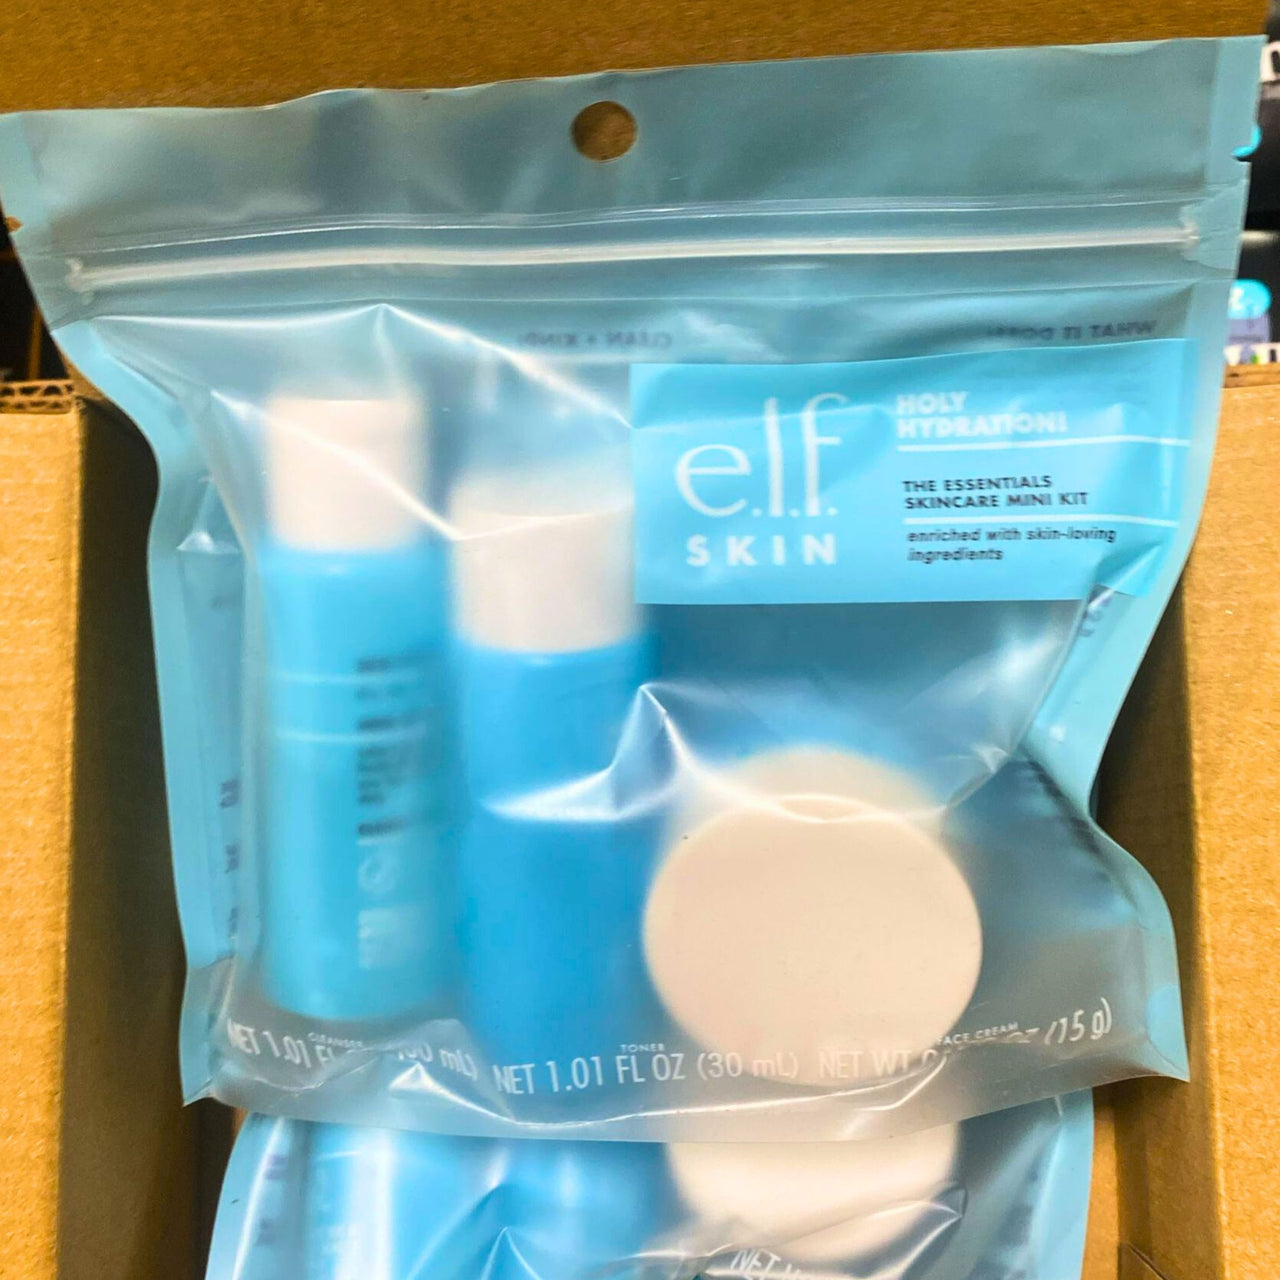 Elf Skin Holy Hydration The Essentials Skincare Mini Kit 